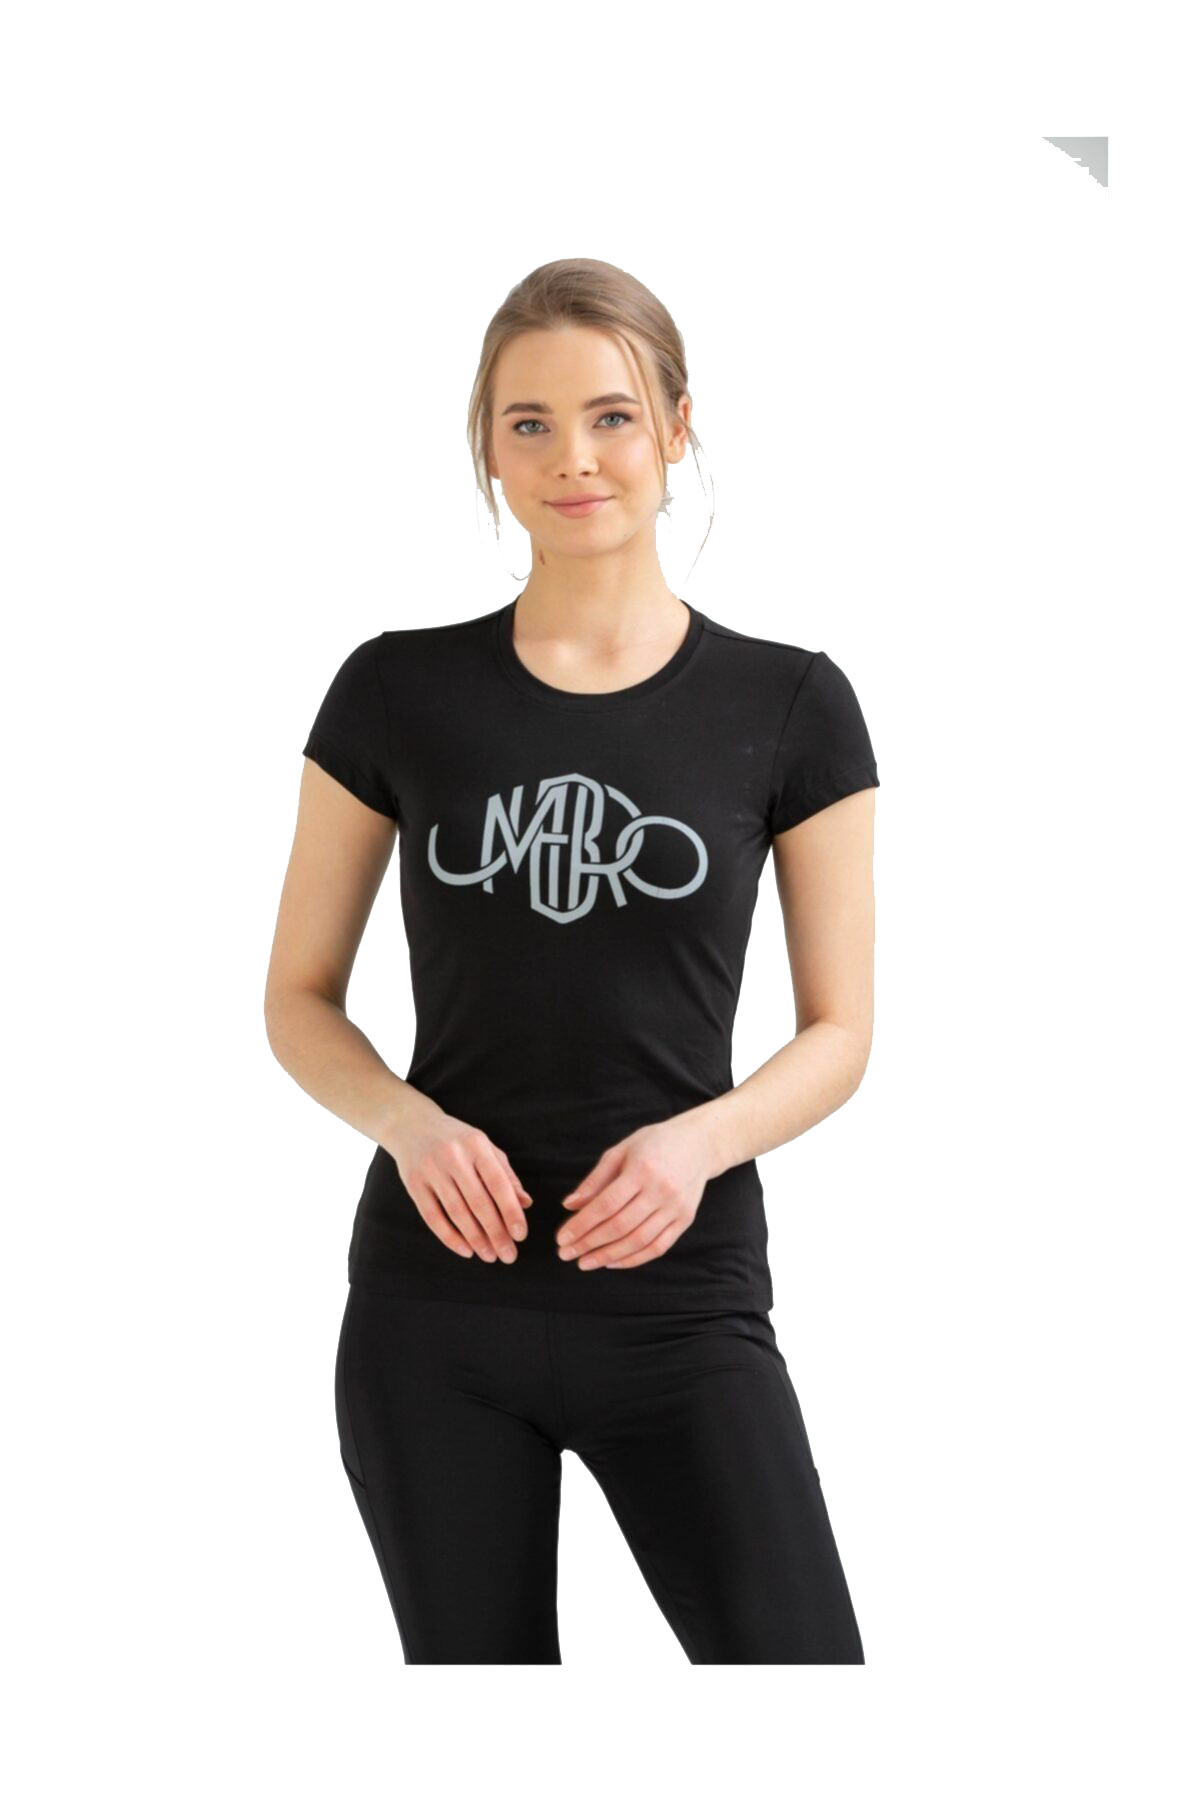 Umbro VF-0028 Mro Supported Kadın Tshirt